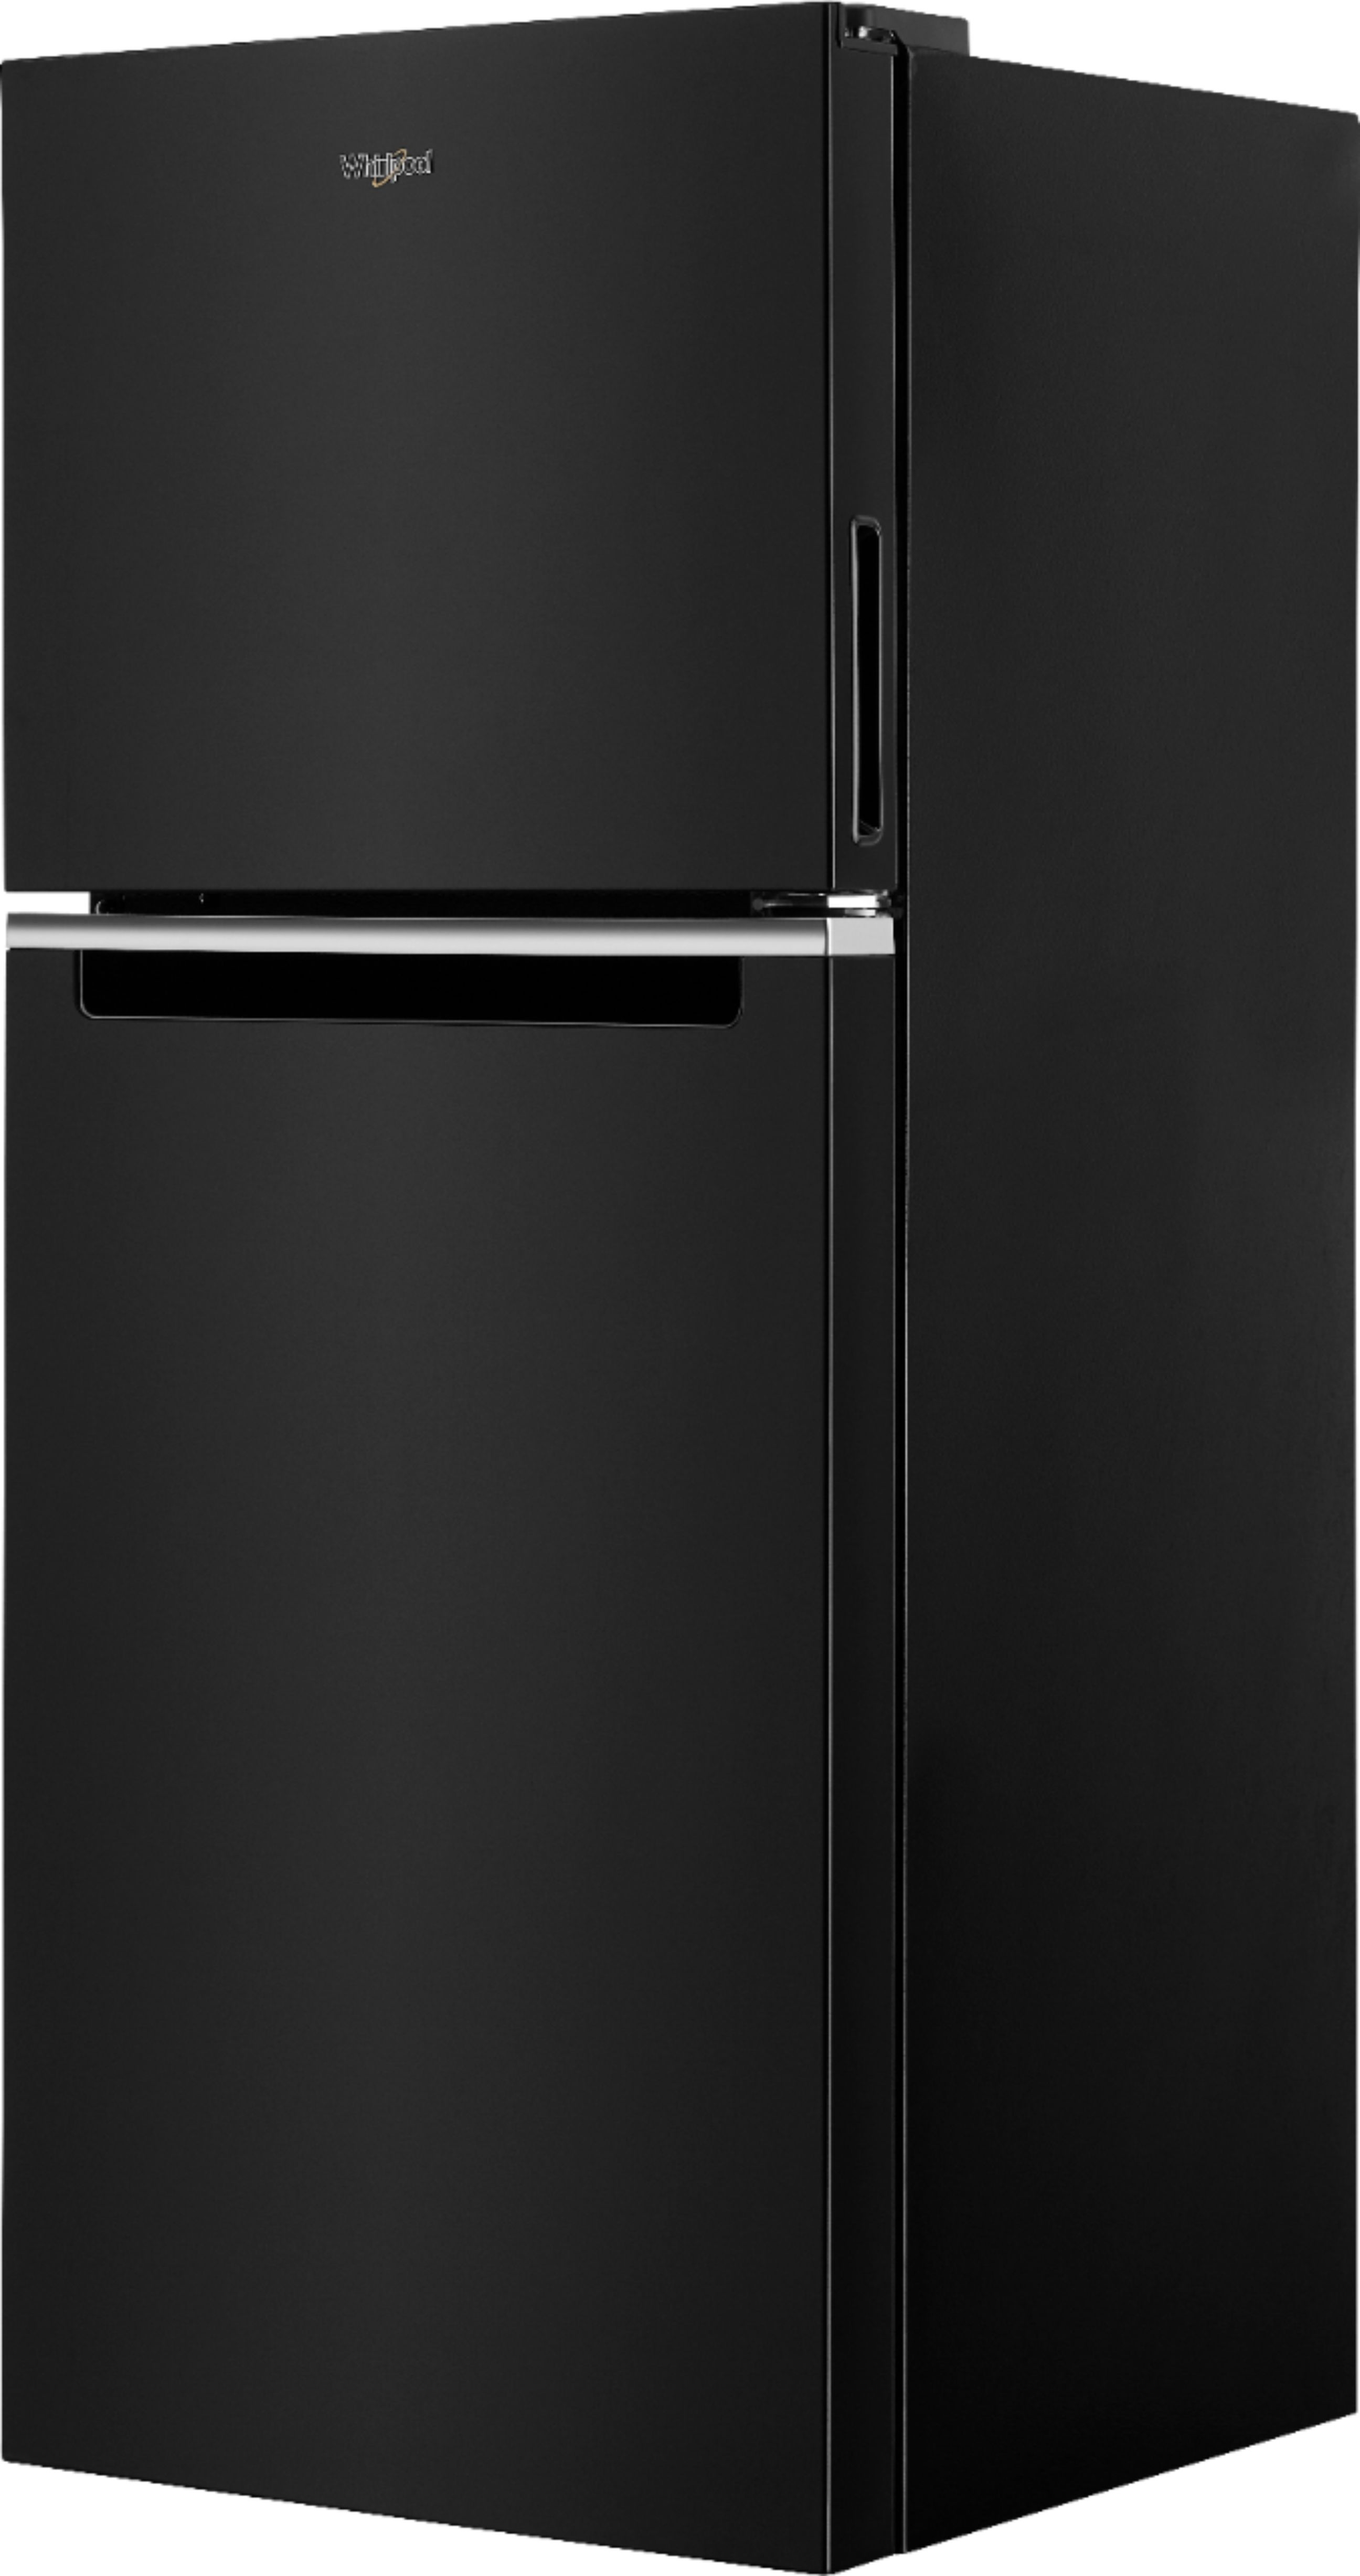 Left View: Whirlpool - 18.3 Cu. Ft. Top-Freezer Refrigerator - Black